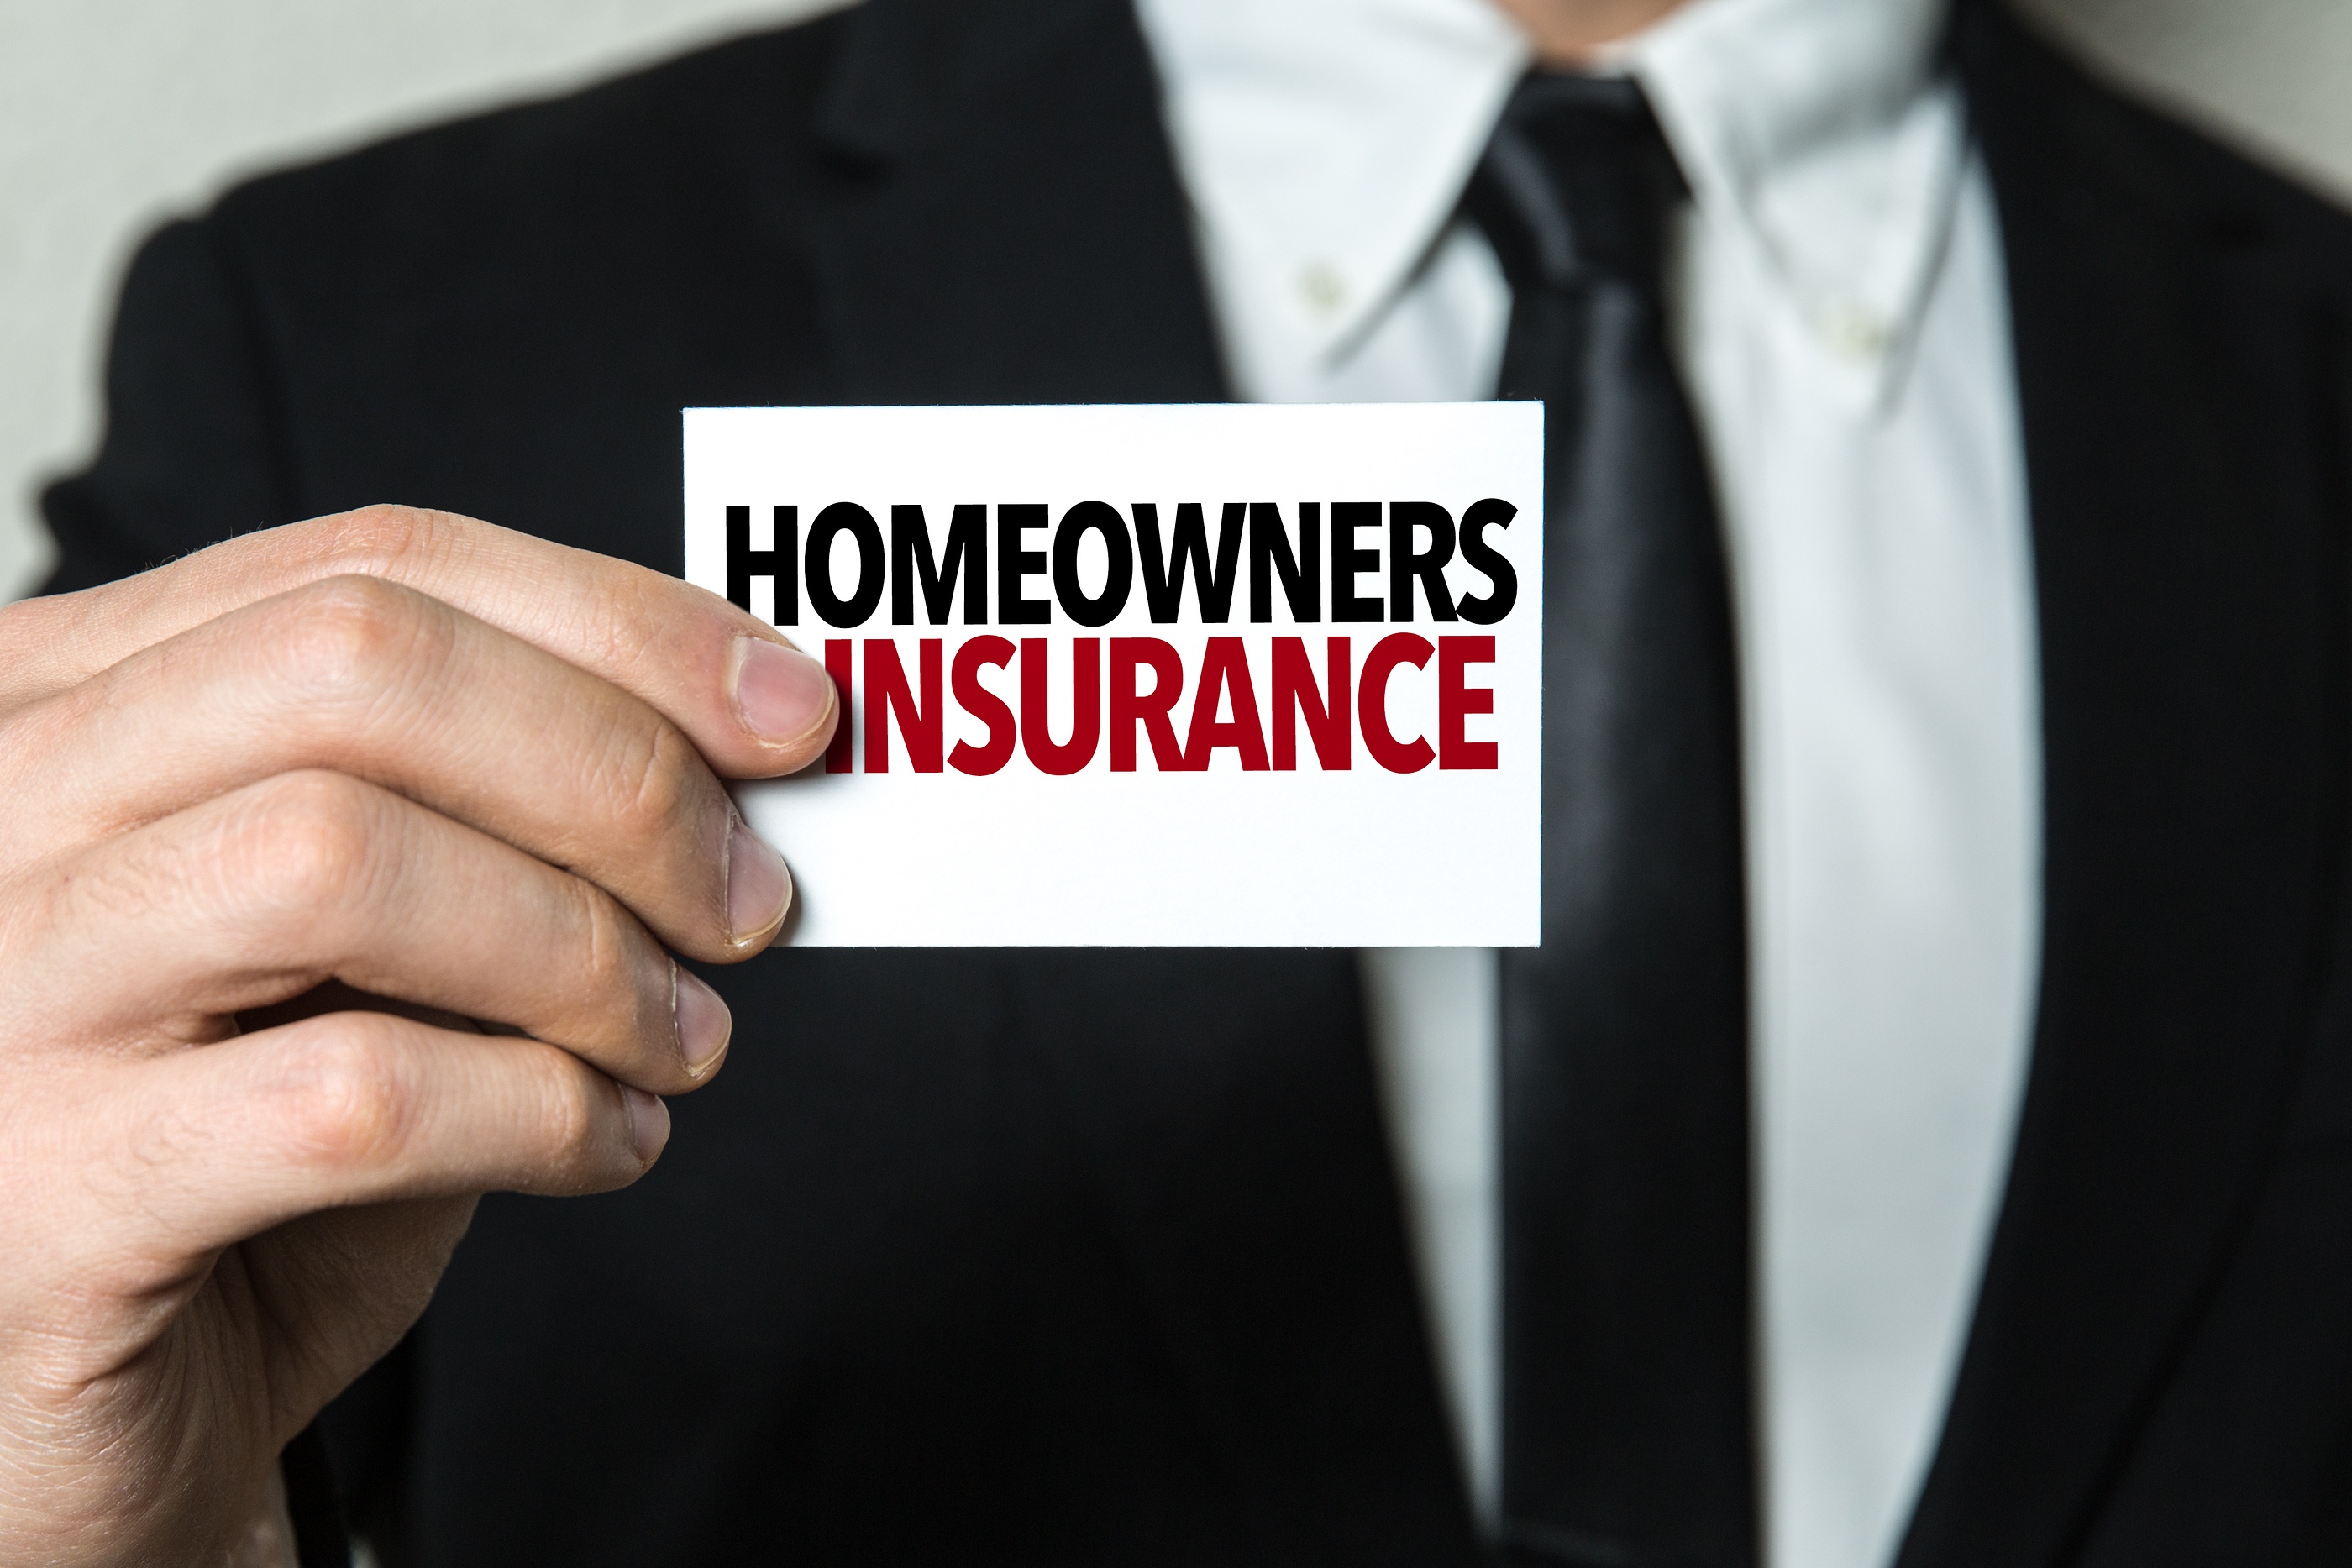 bigstock-Homeowners-Insurance-141371960.jpg